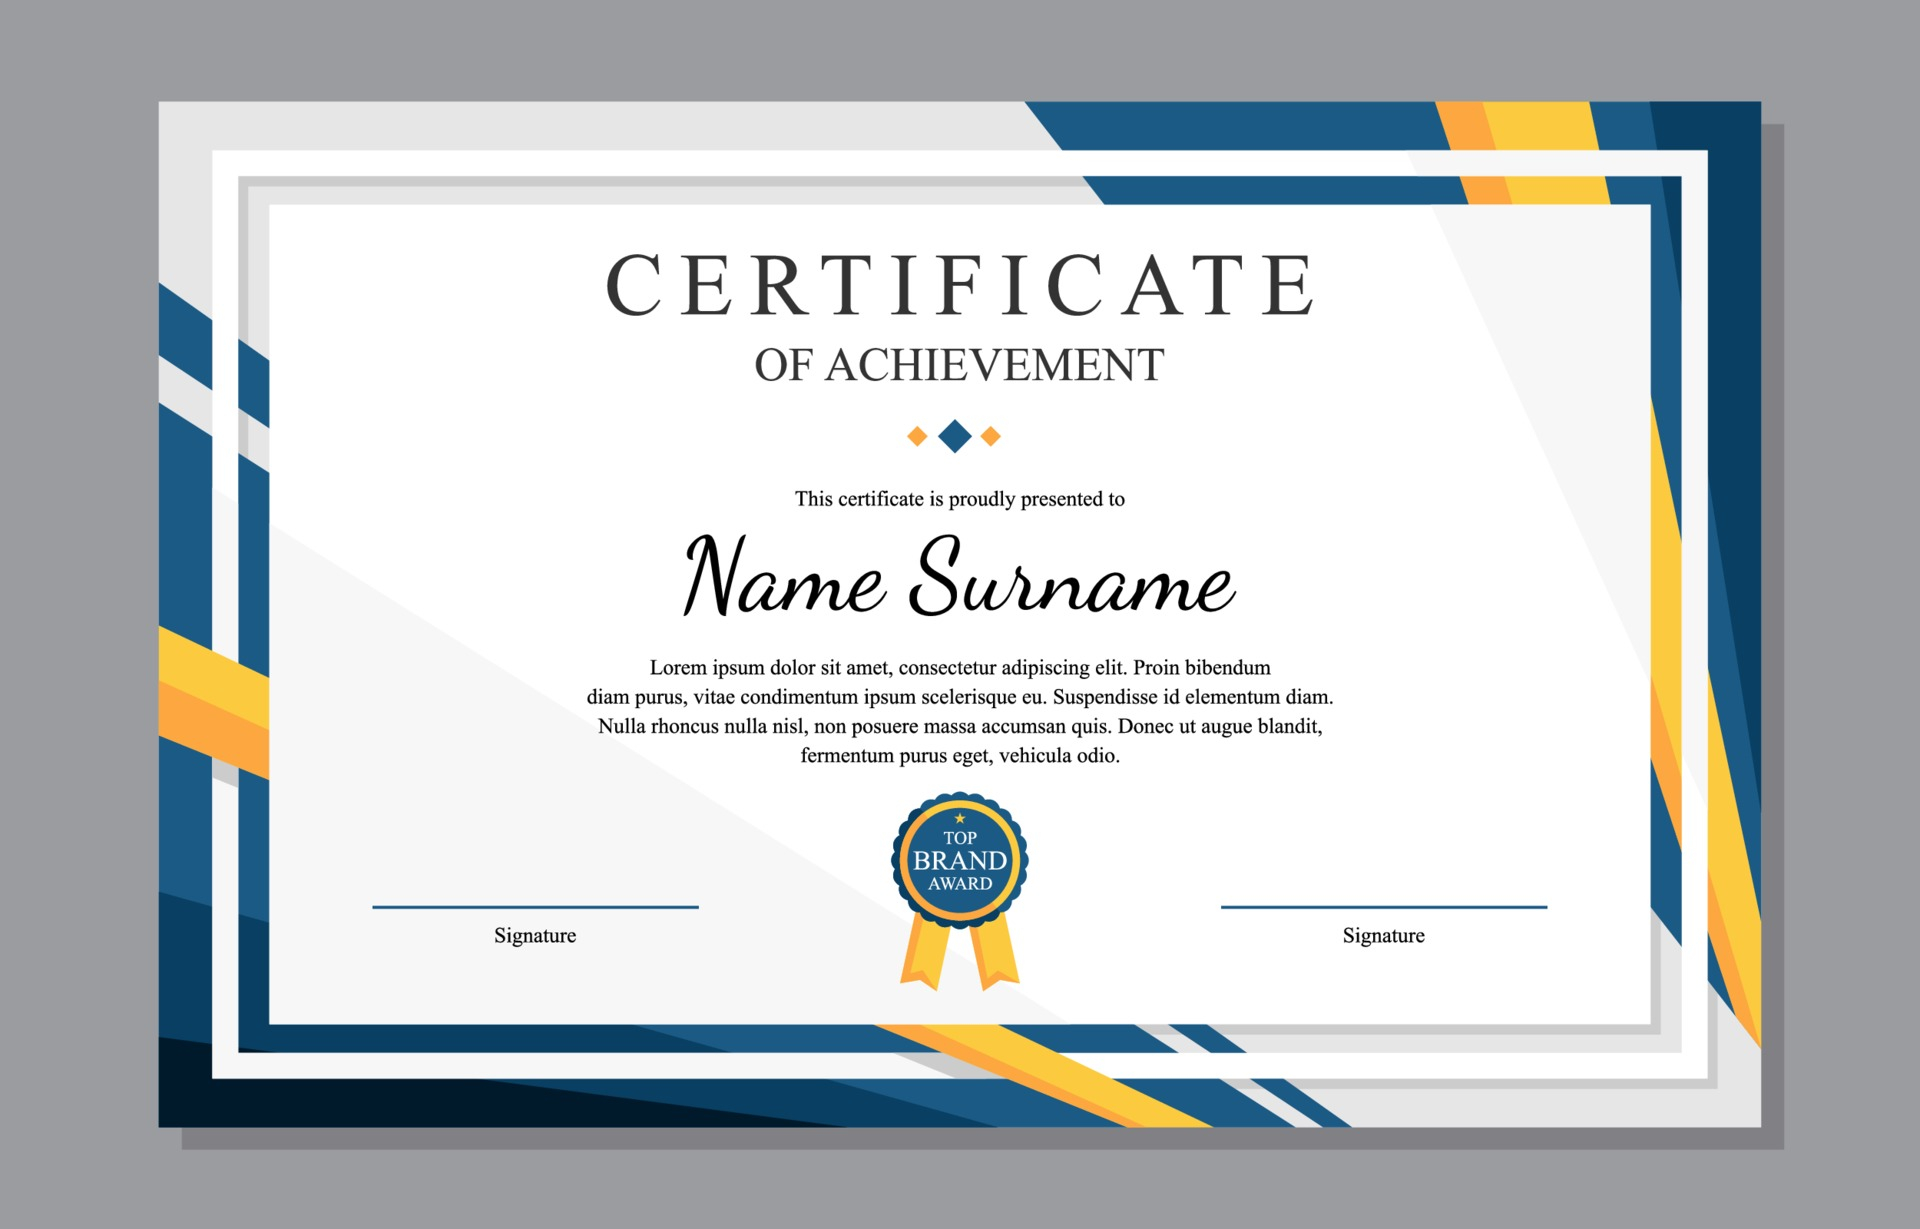 Certificate Templates, Free Certificate Designs Within Award Certificate Design Template